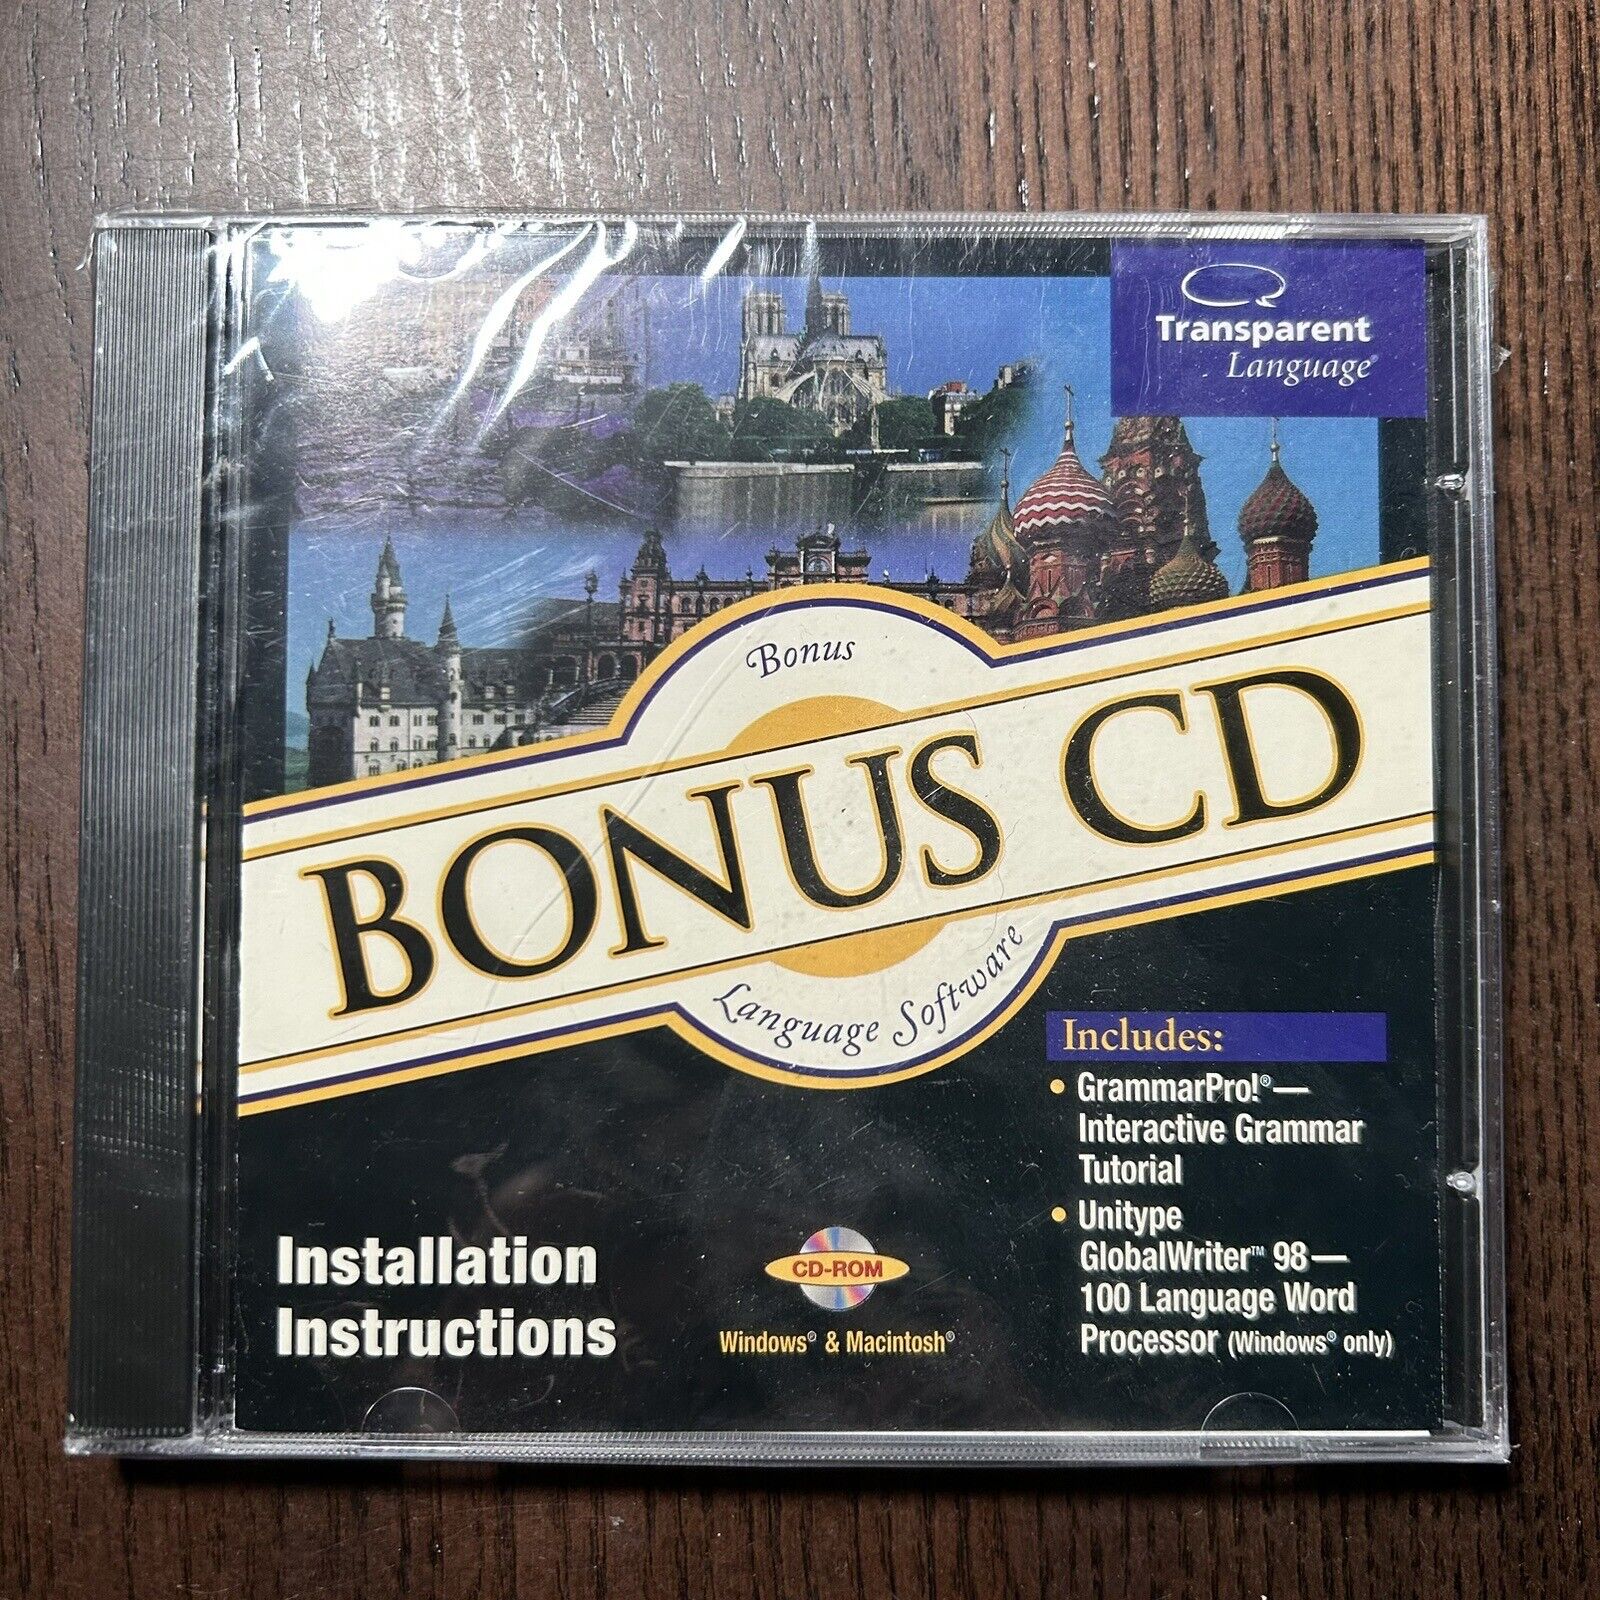 Bonus CD Transparent Language Software Windows Macintosh Grammar New and Sealed